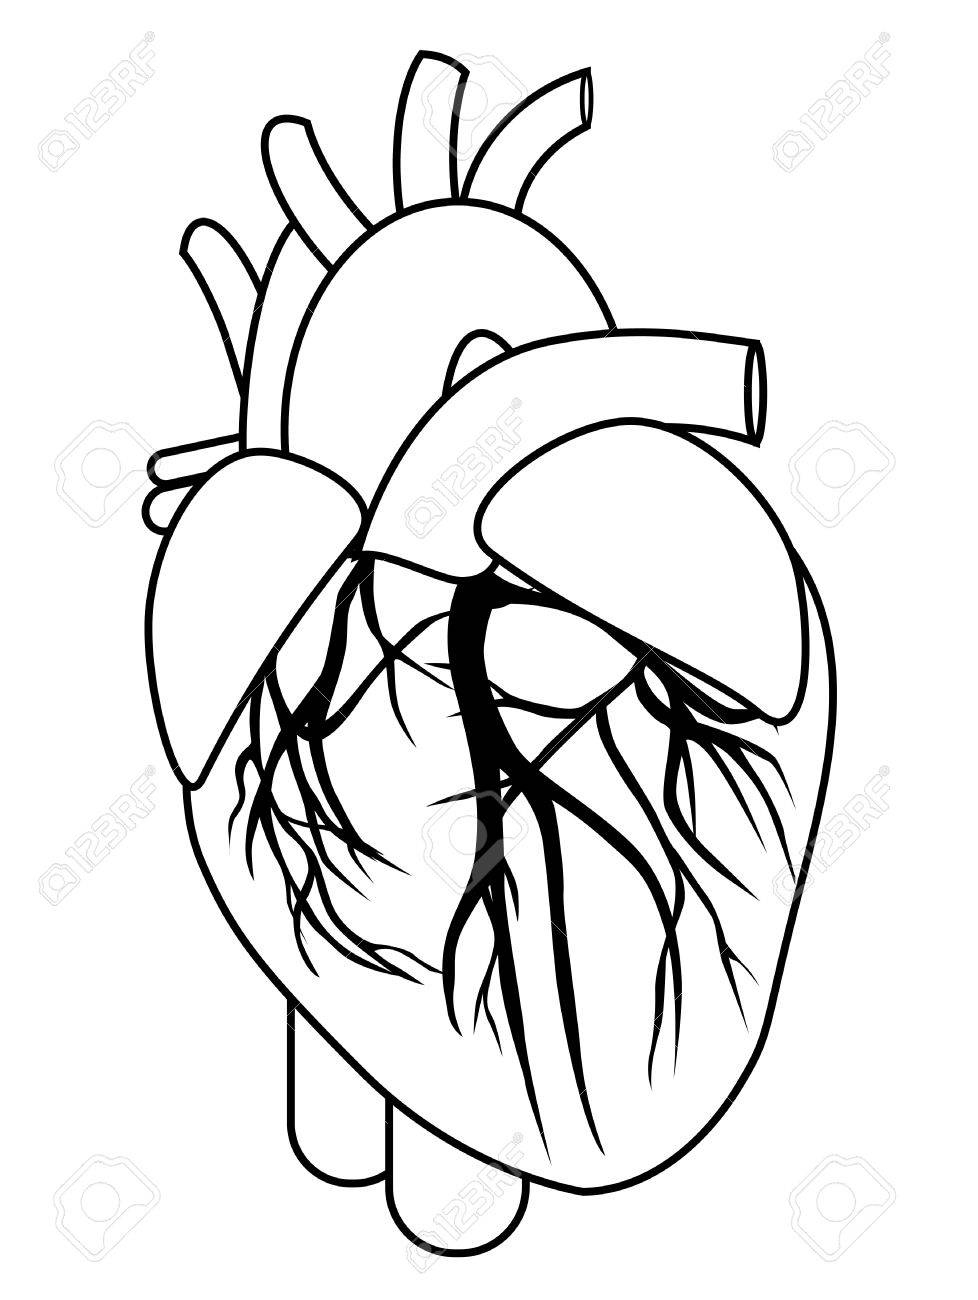 Heart clipart body.